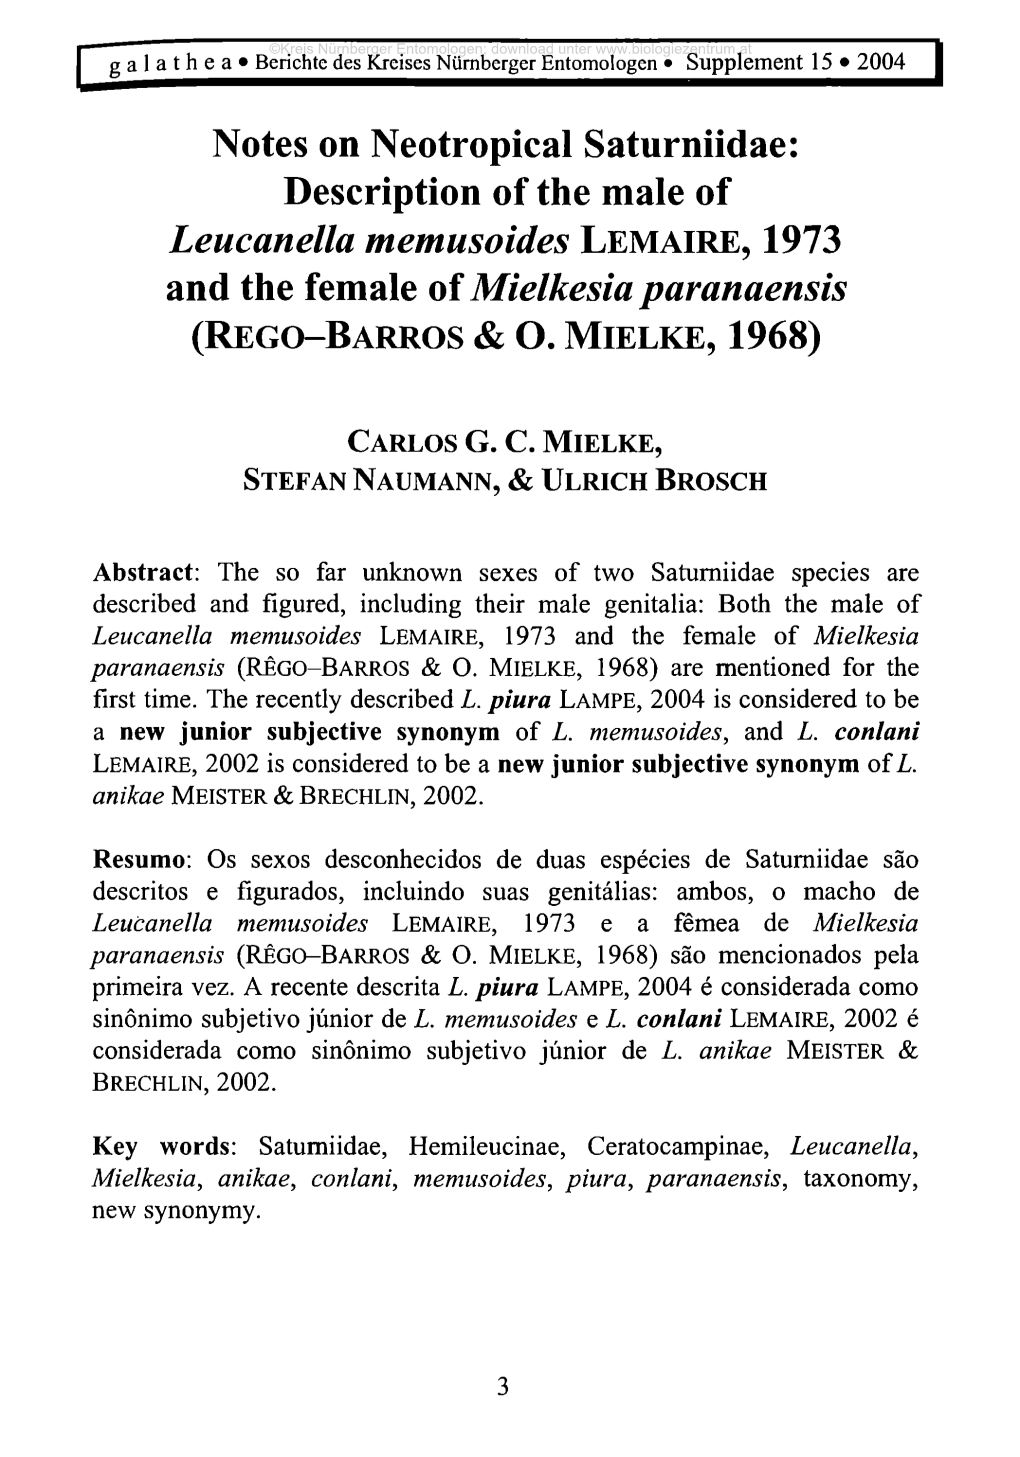 Notes on Neotropical Satumiidae: Description of the Male of Leucanella Memusoides L E M a Ir E , 1973 and the Female of Mielkesia Paranaensis (R Eg O -B a R Ro S & O